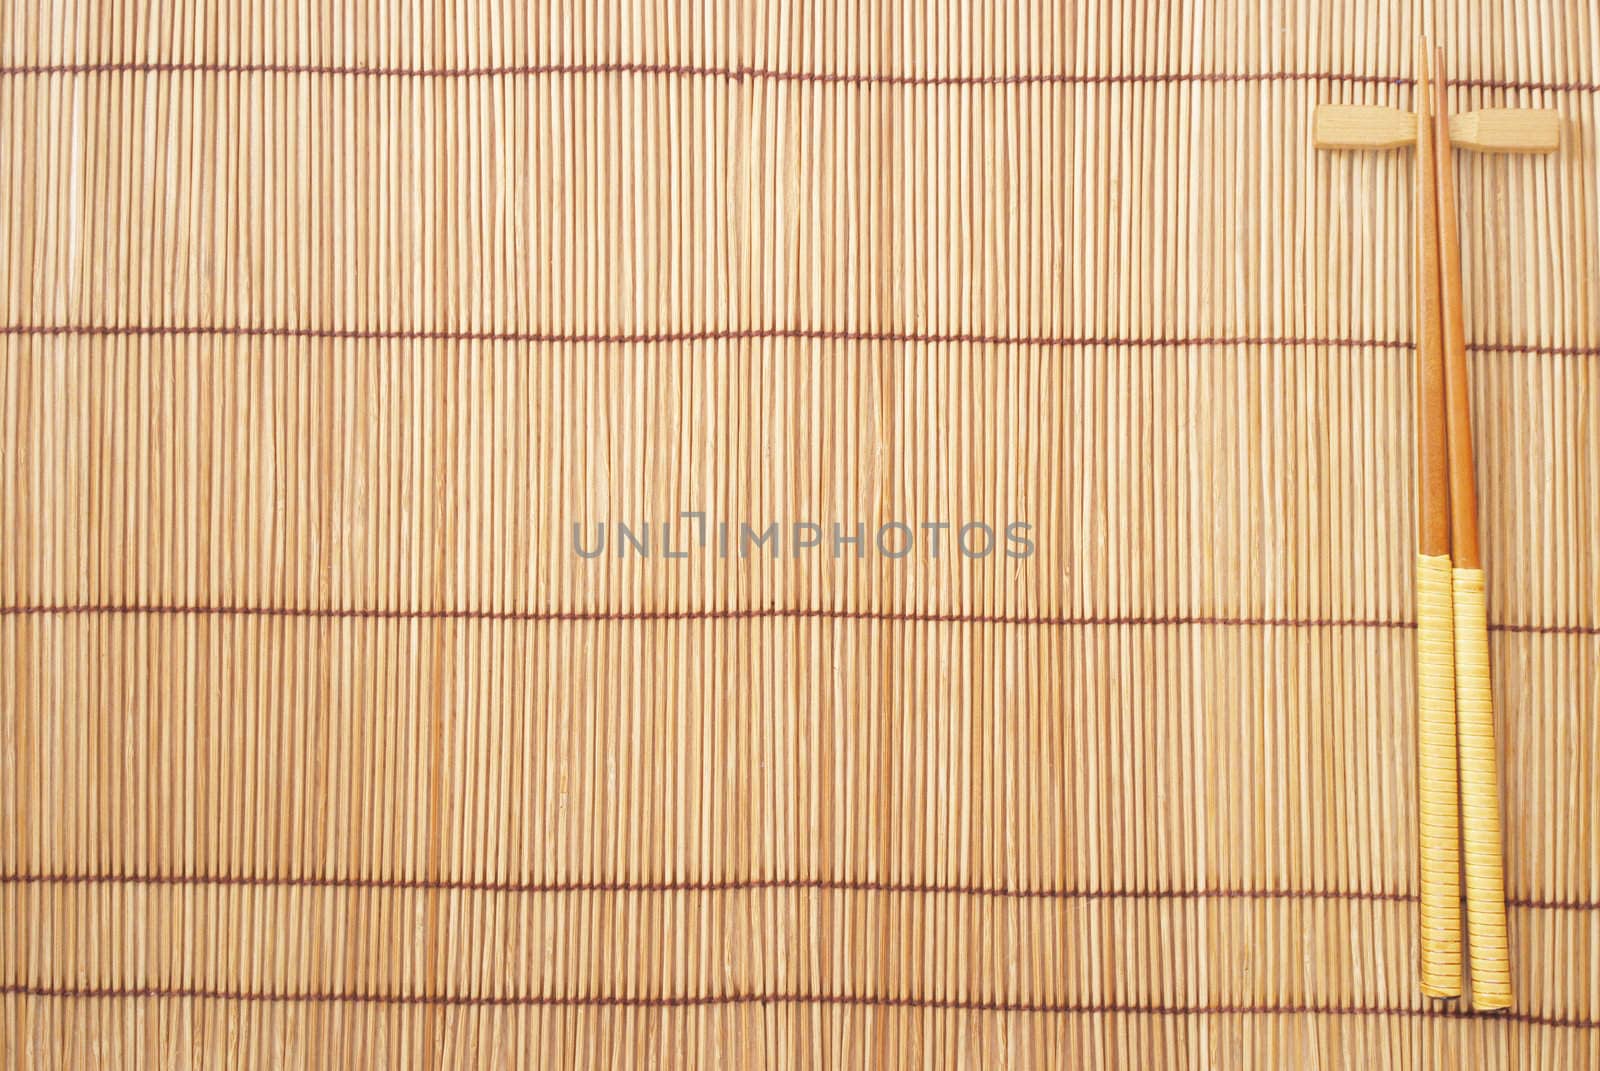 Chopsticks on brown bamboo matting background  by svtrotof